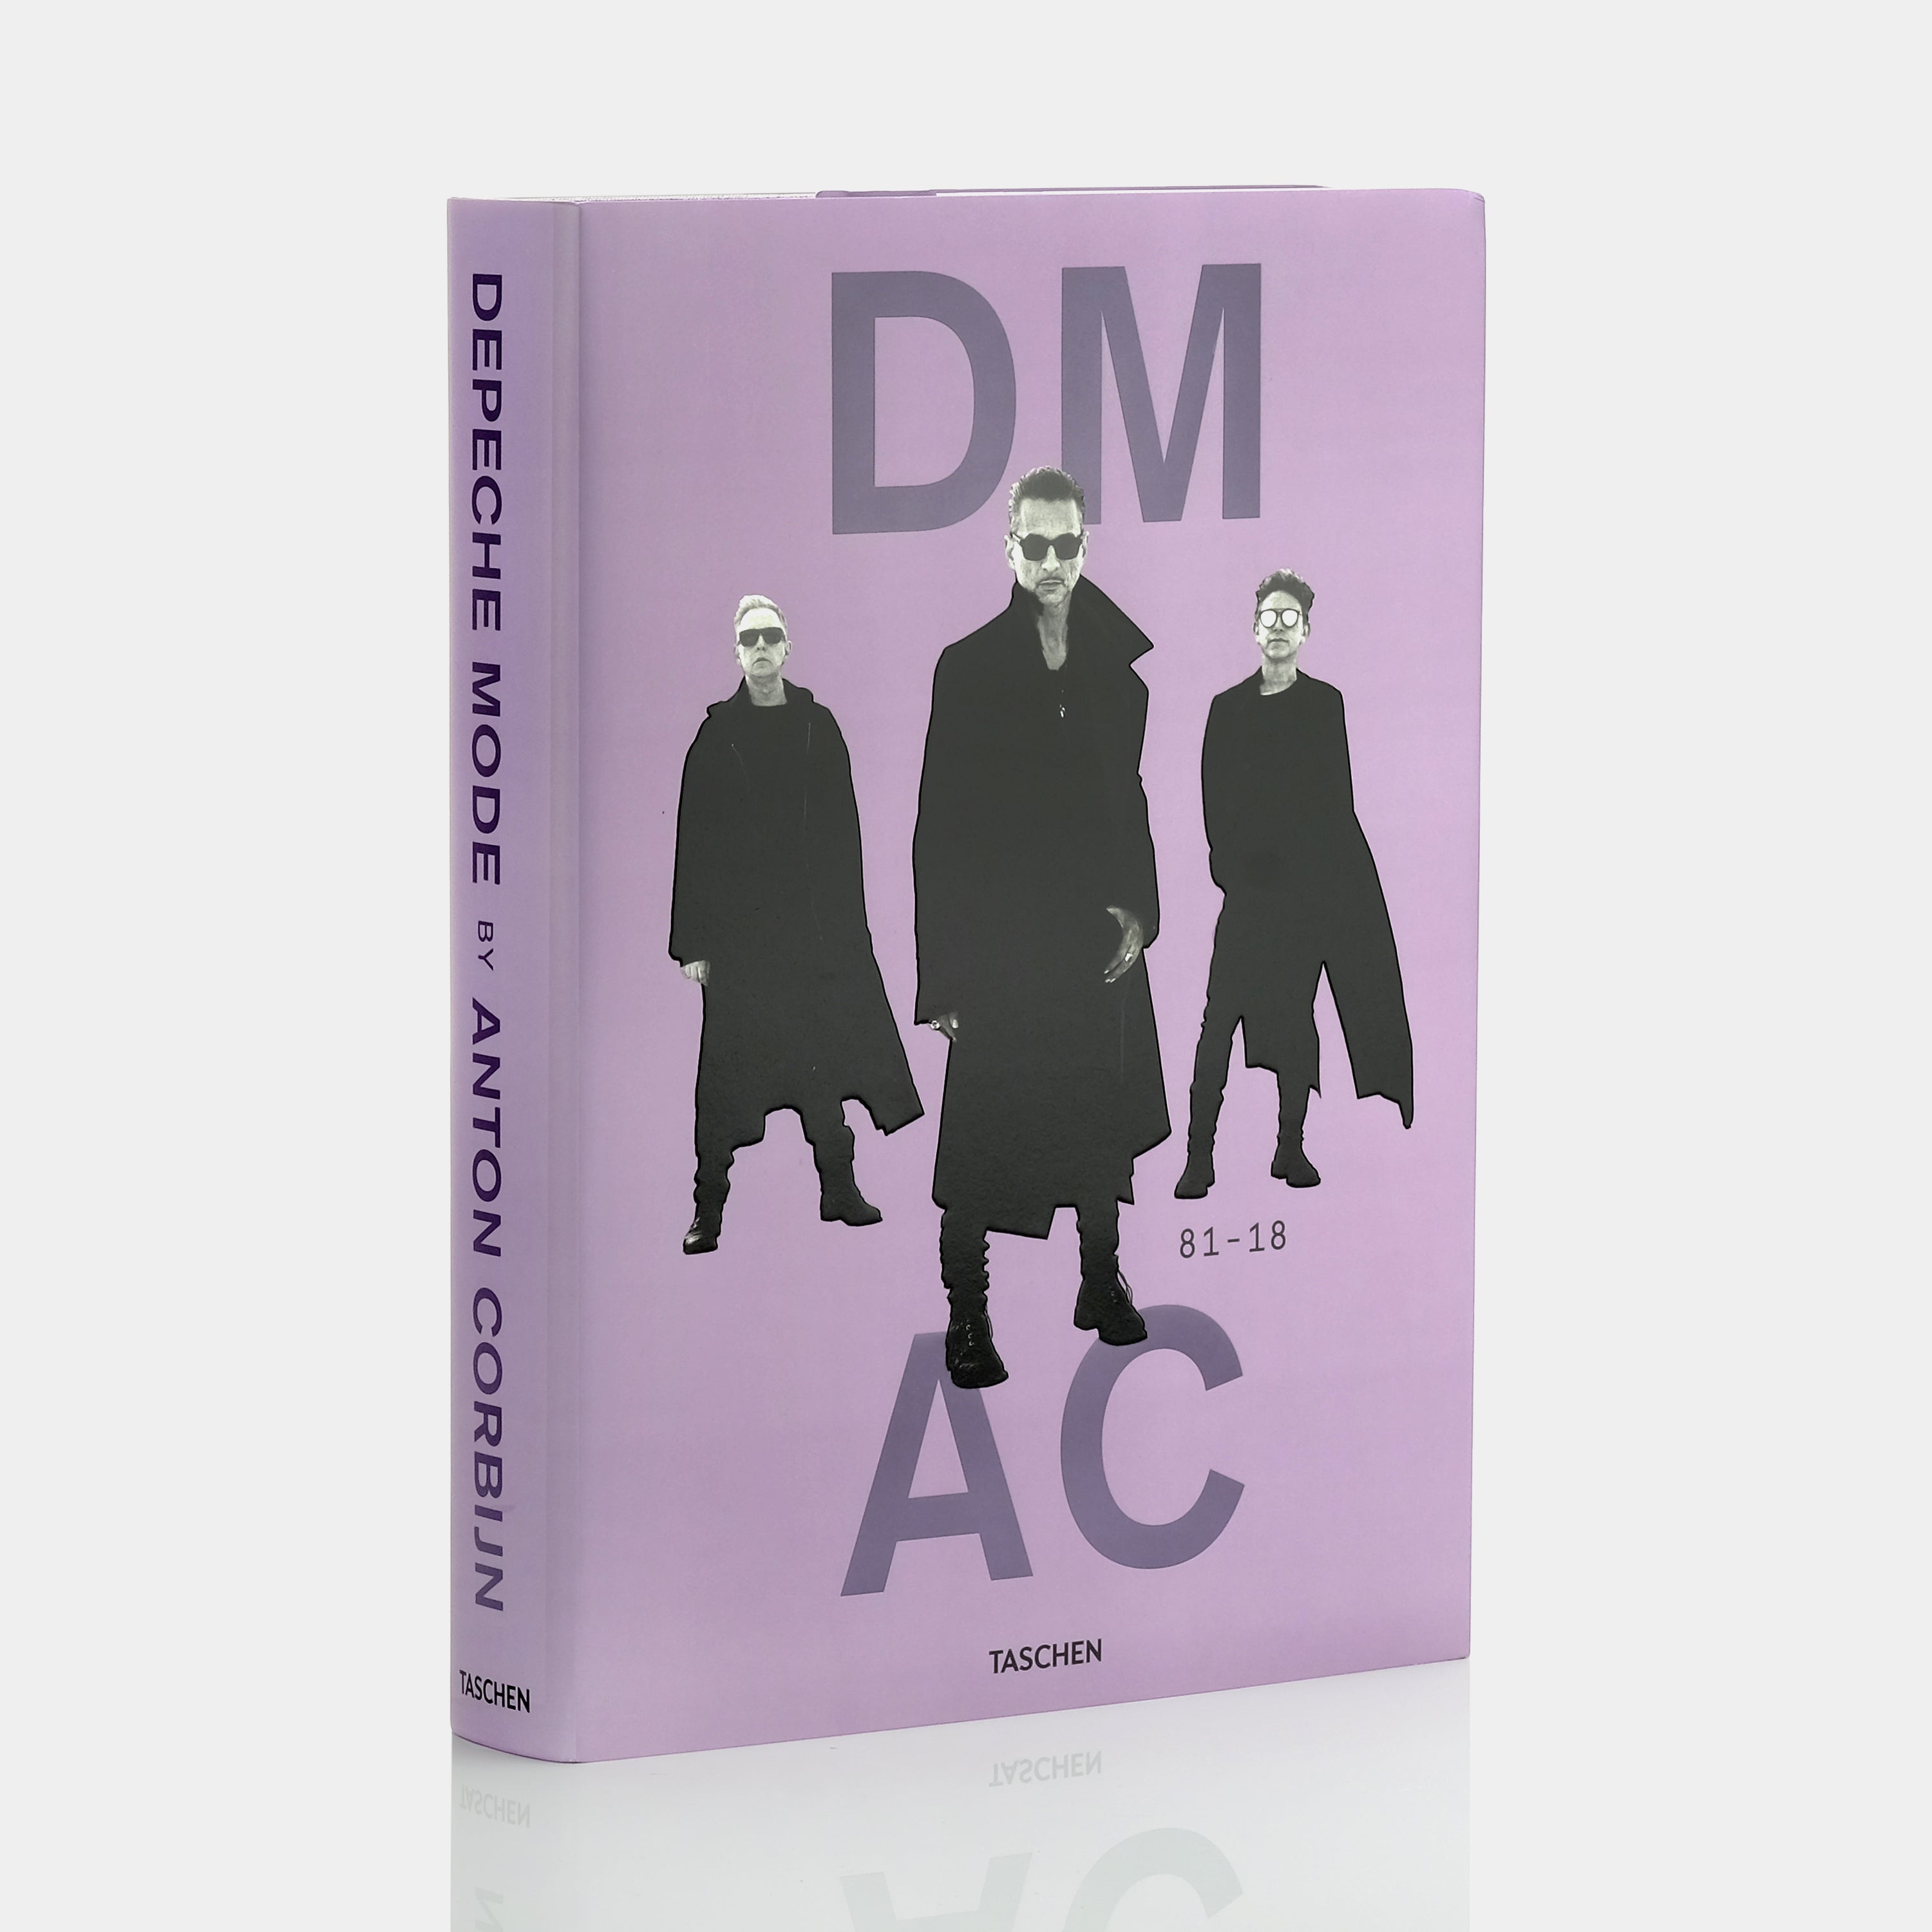 Depeche Mode by Anton Corbijn XL Taschen Book